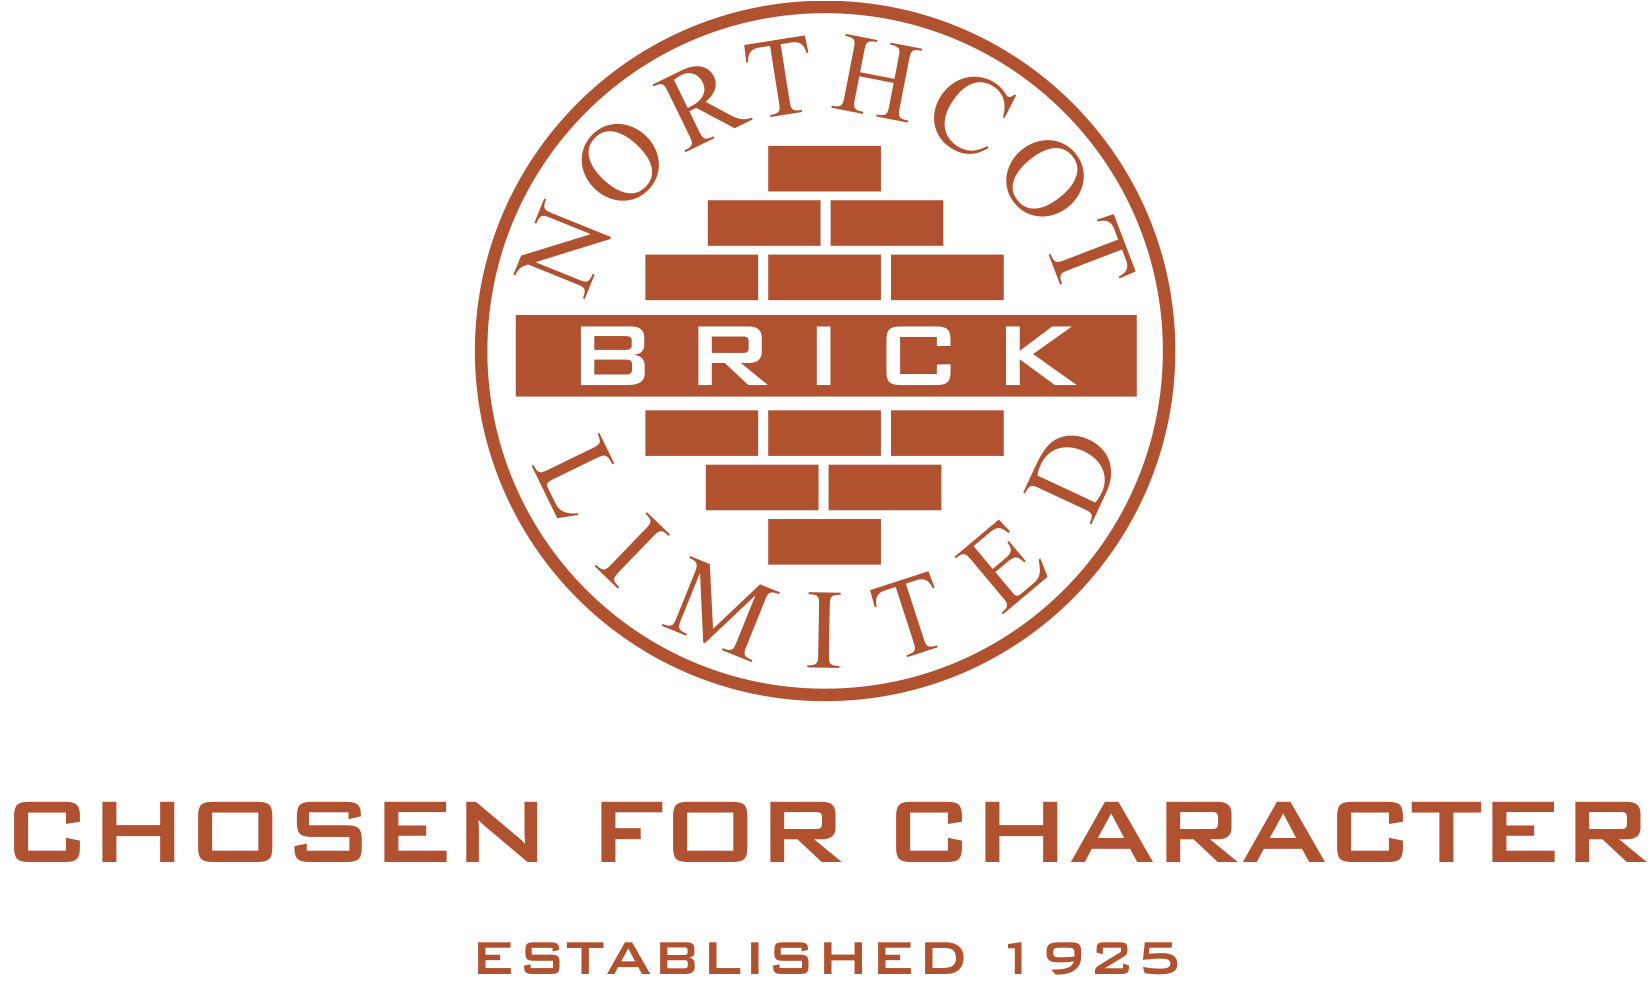 Northcot Brick Ltd - Logo